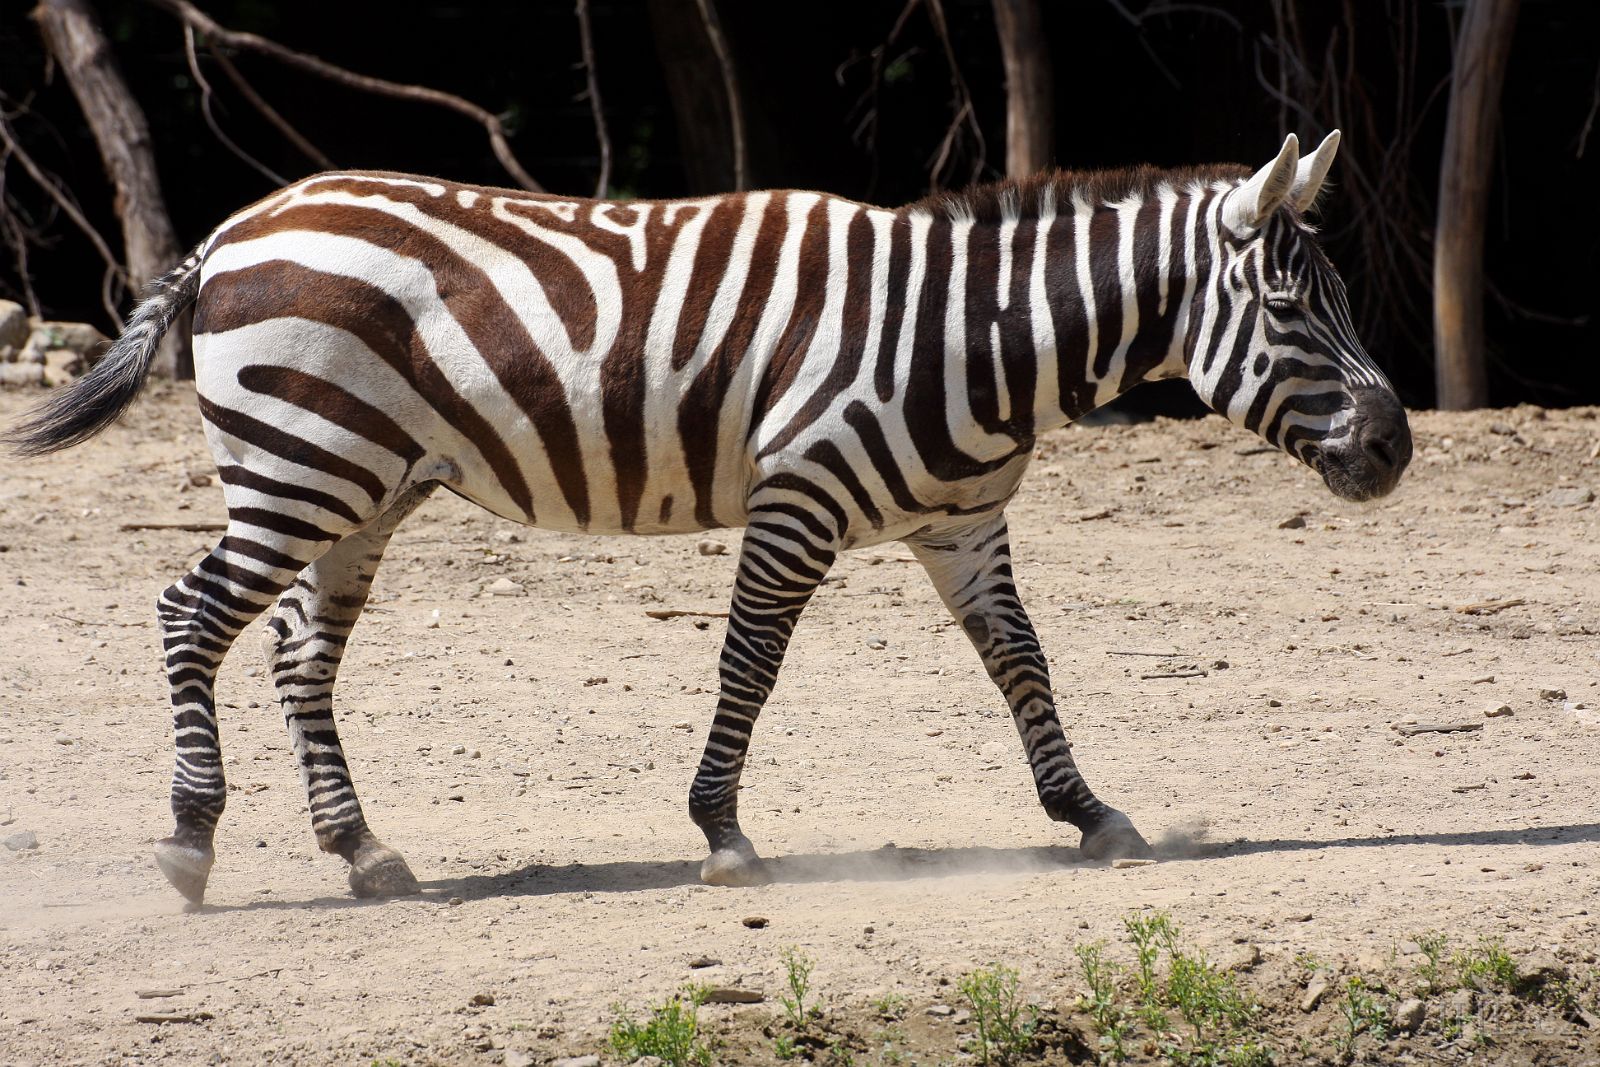 140619cc076.JPG - Zebra stepní bezhřívá (Equus burchellii cunninghami)